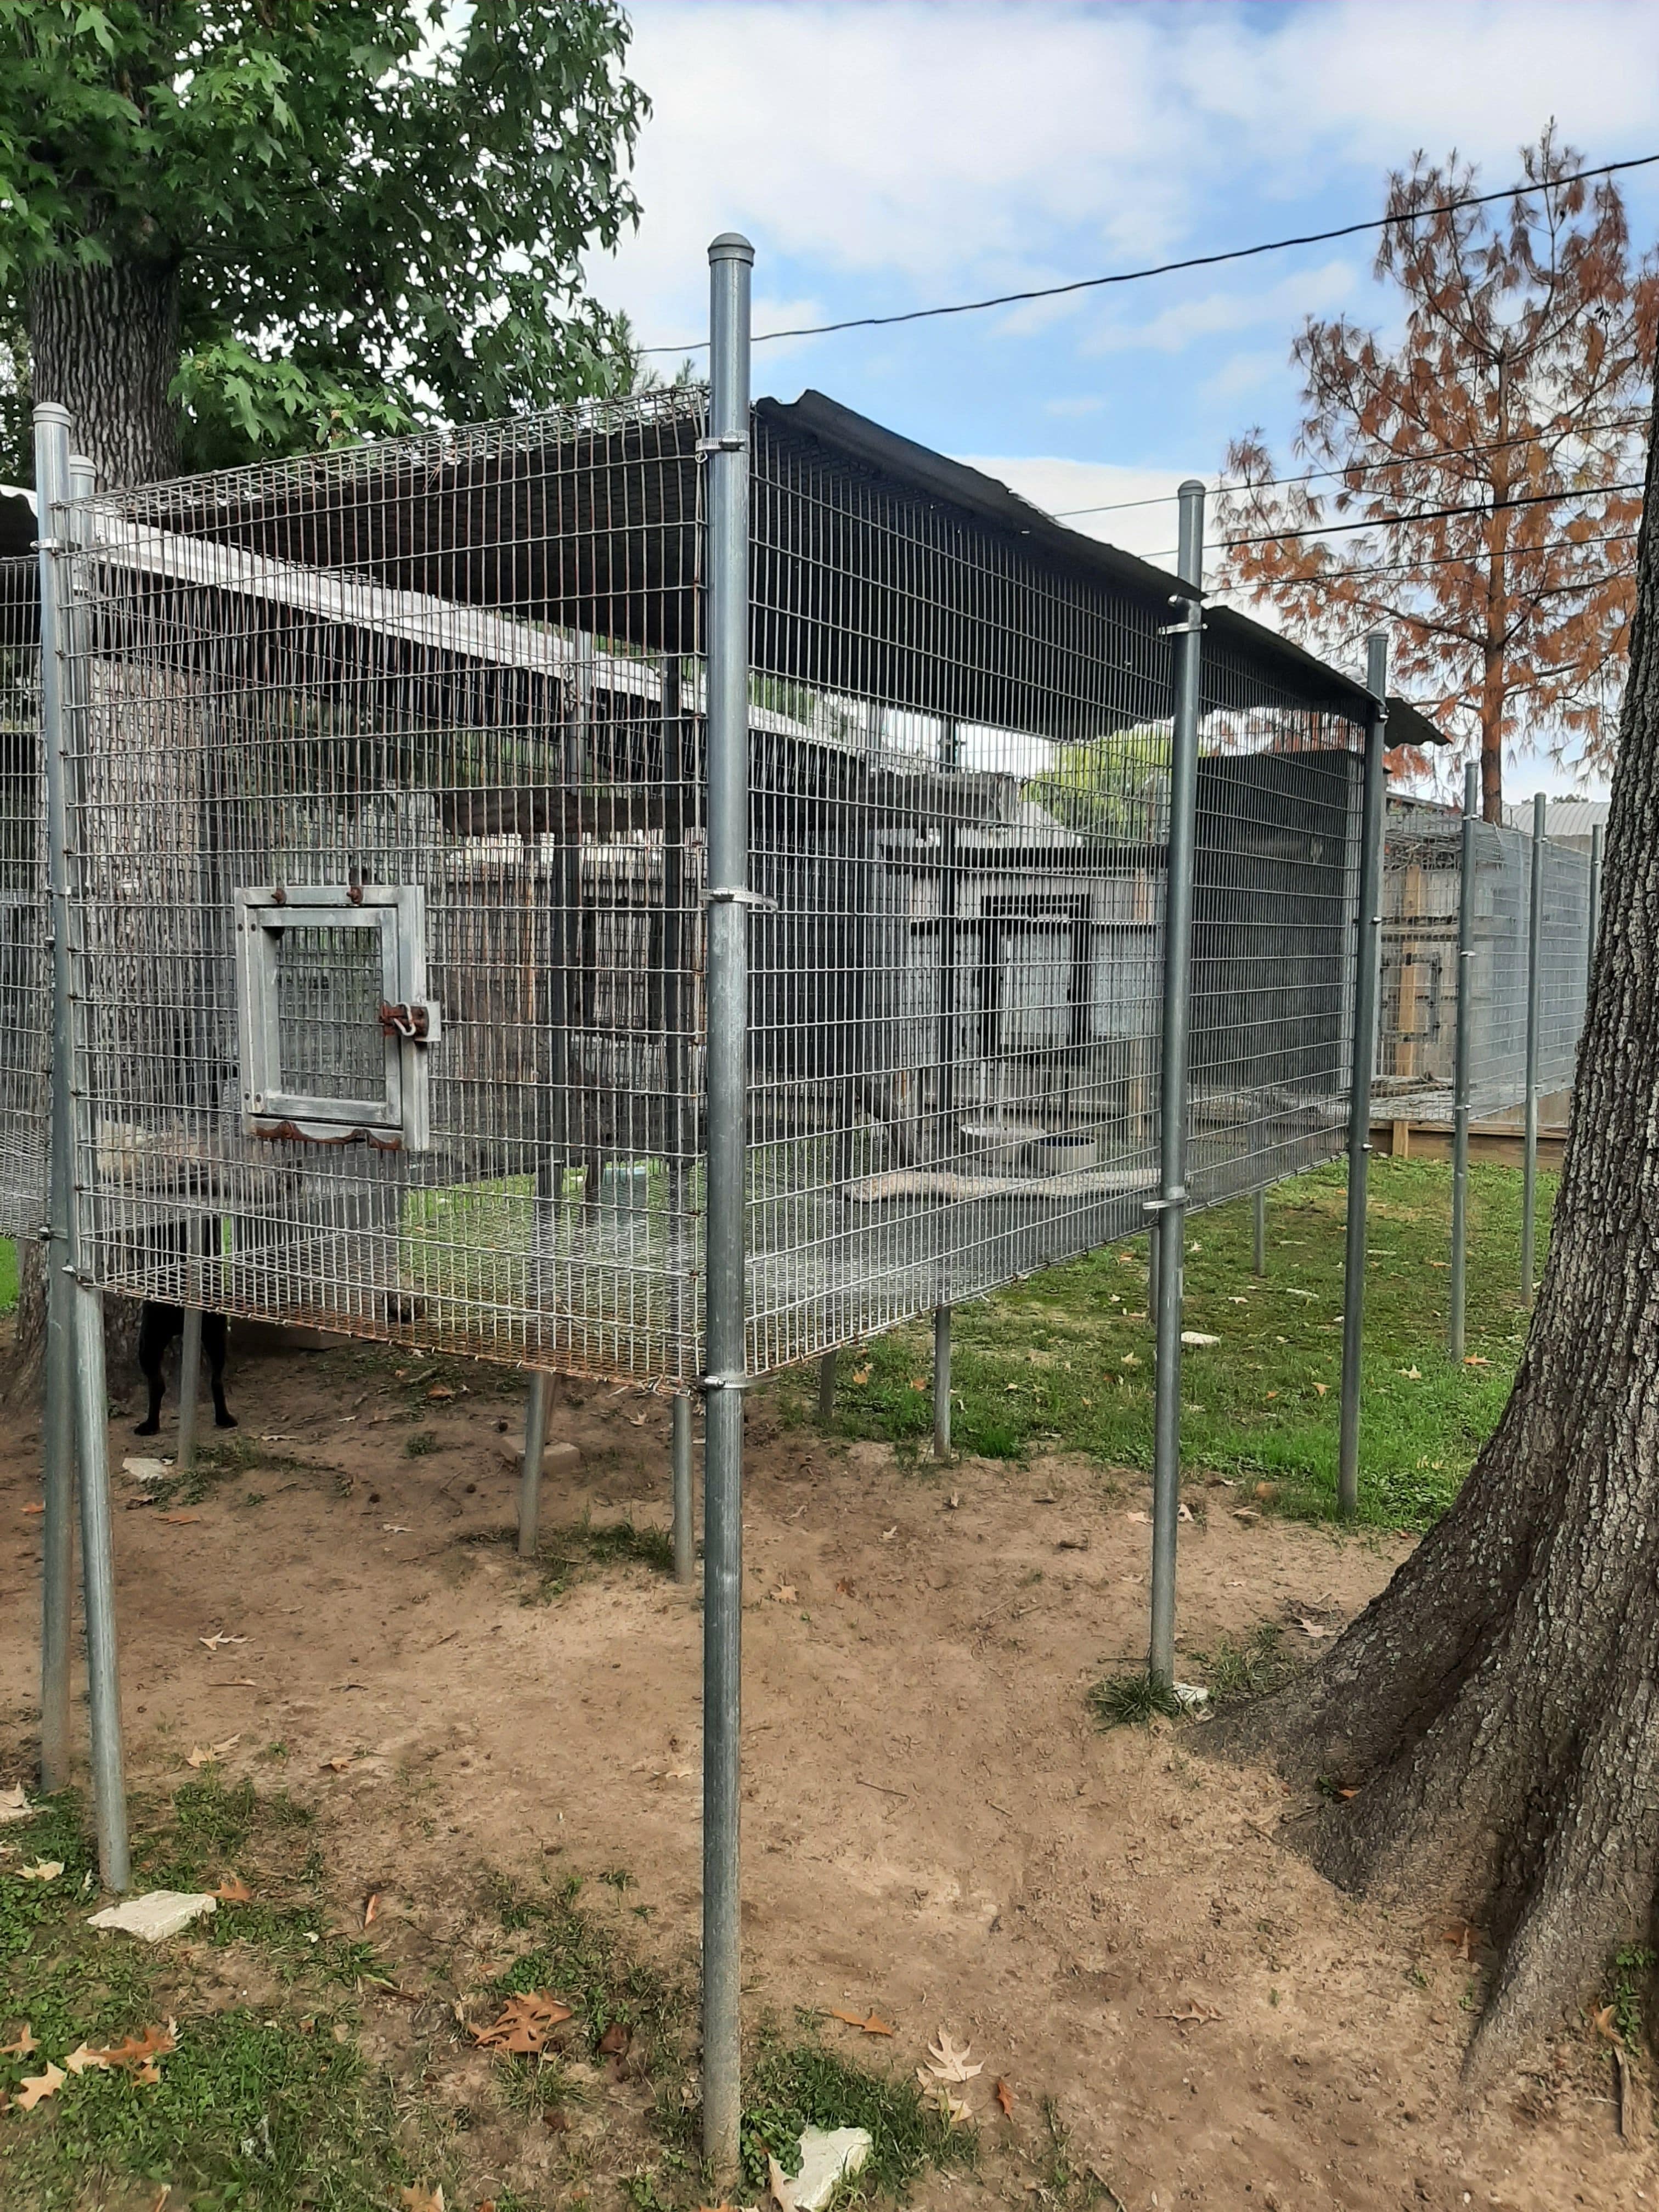 9x4x3 breeder bird cage for sale in houston, texas